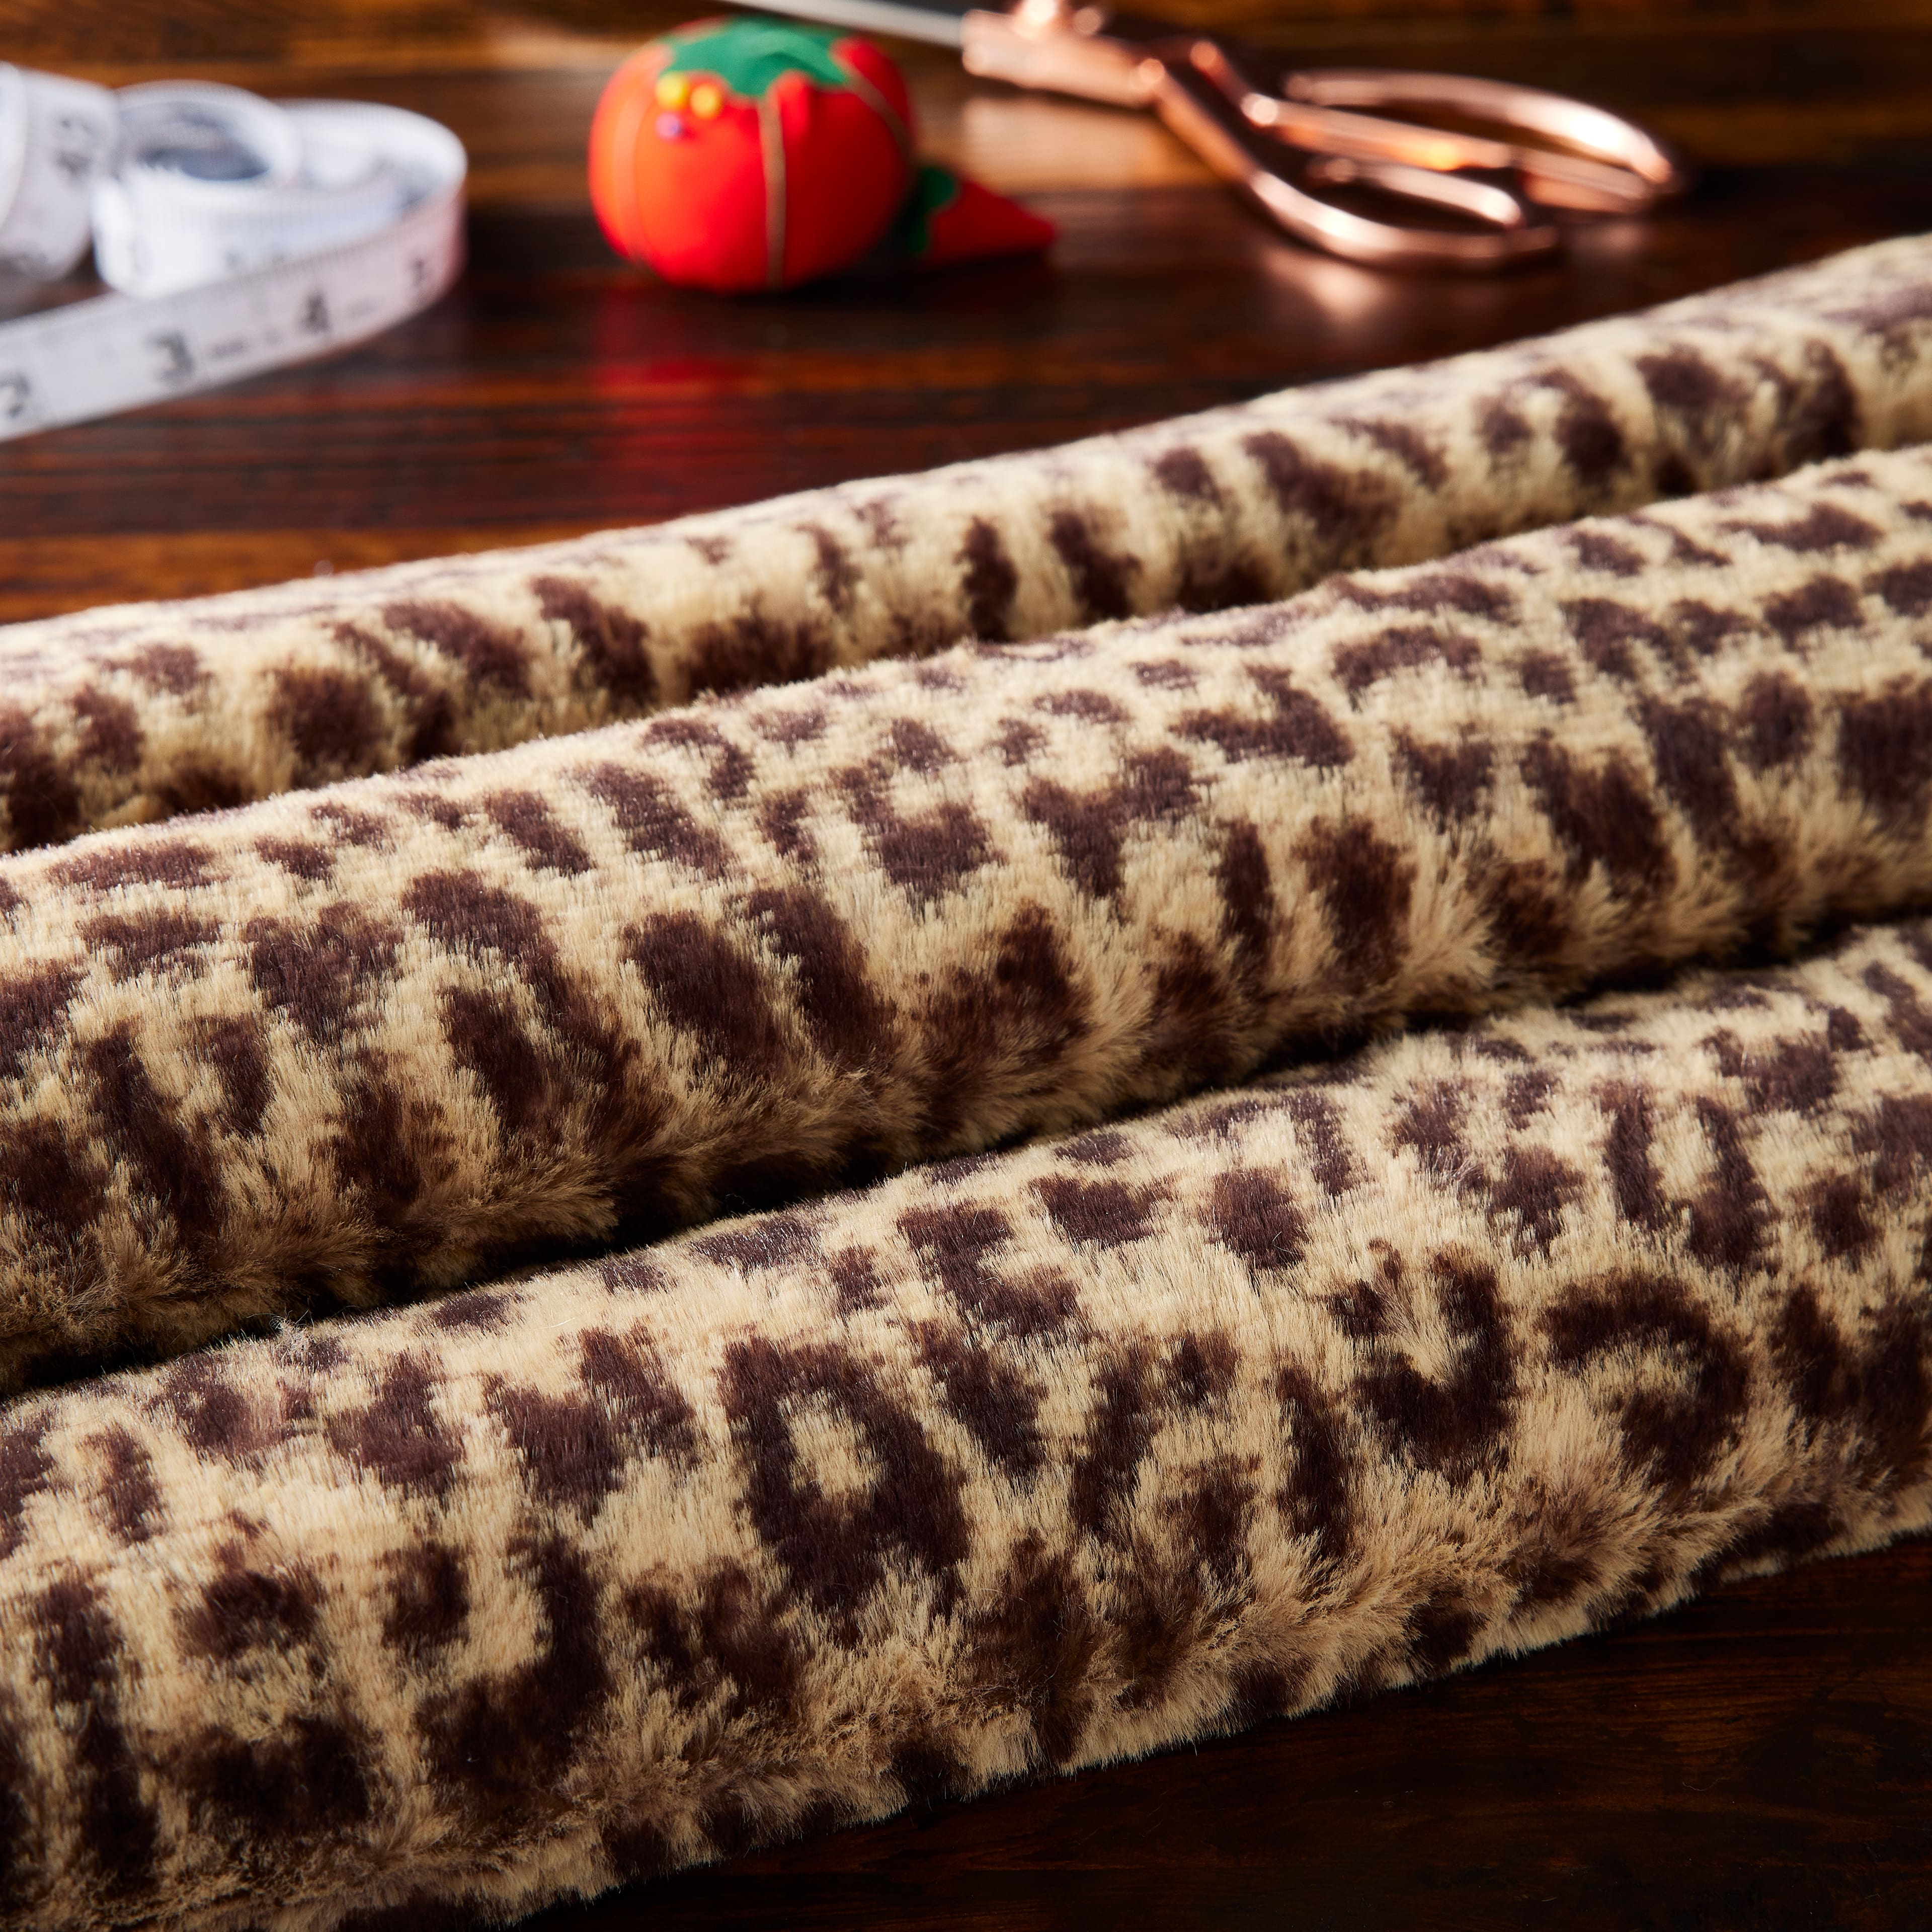 Baby Cheetah Faux Fur Fabric